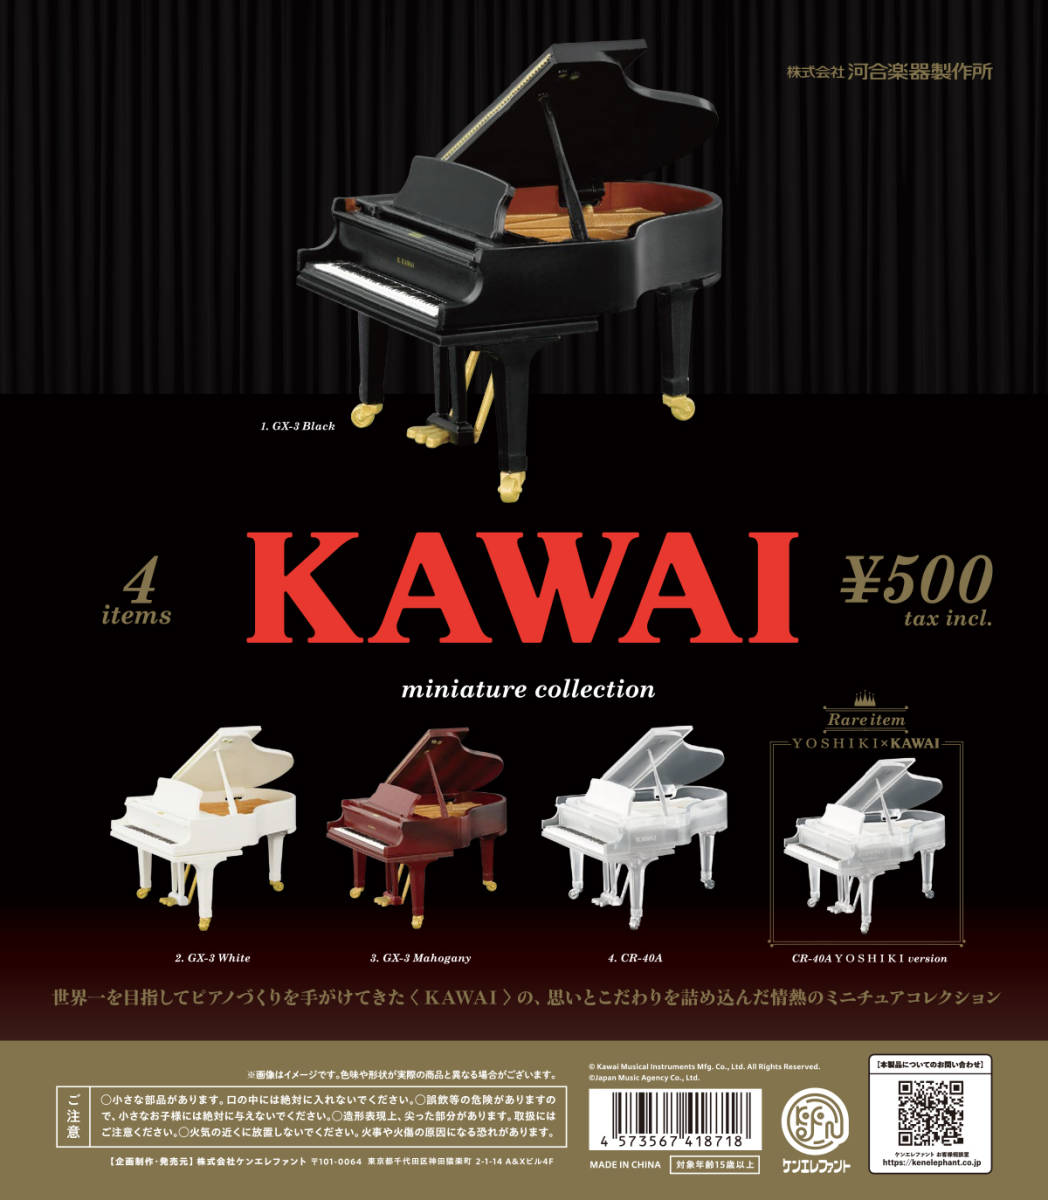 KAWAI ミニチュア コレクション レア CR-40A YOSHIKI Ver. 単品 クリスタルピアノ カワイ 河合楽器 よしき バージョン X JAPAN ガチャ_こちらの広告媒体は付属しません。